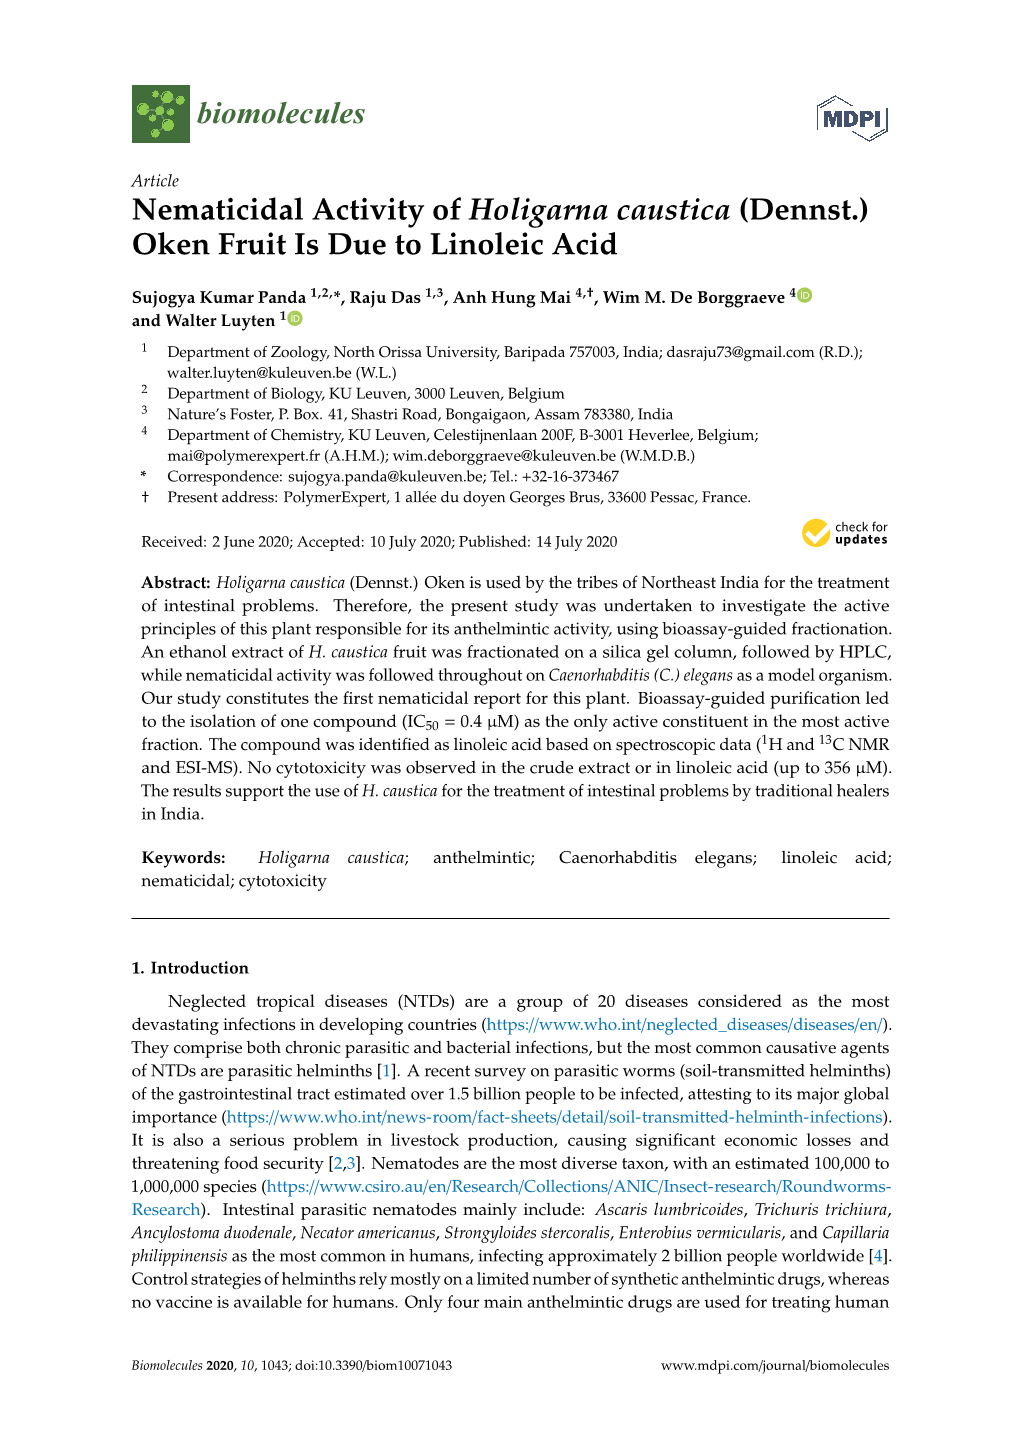 Nematicidal Activity of Holigarna Caustica (Dennst.) Oken Fruit Is Due to Linoleic Acid